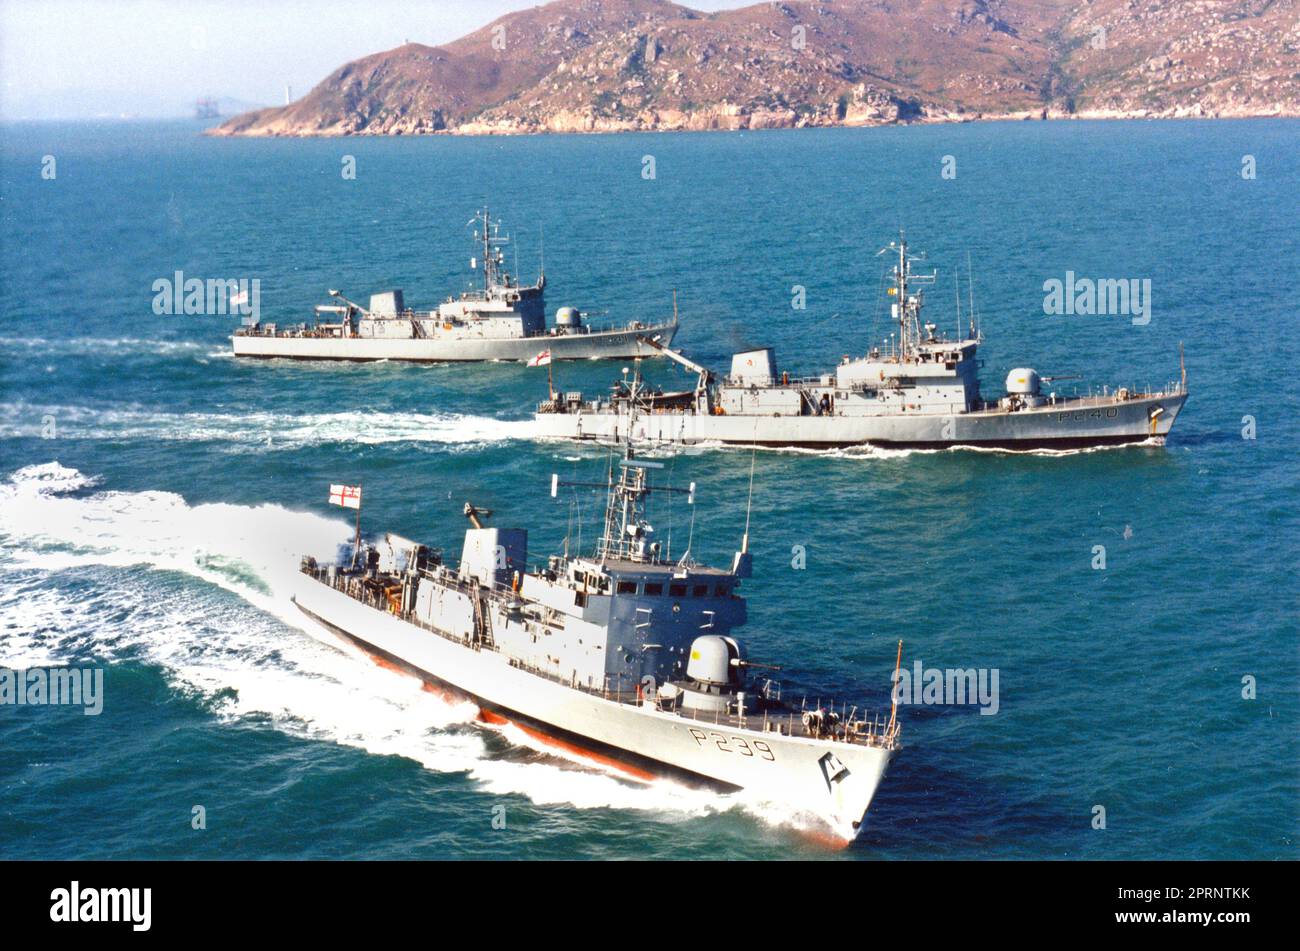 Ships of the Royal Navy's Hong Kong Squadron exercising at sea in circa 1996, before the hand-over of Hong Kong to China in 1997. Stock Photo